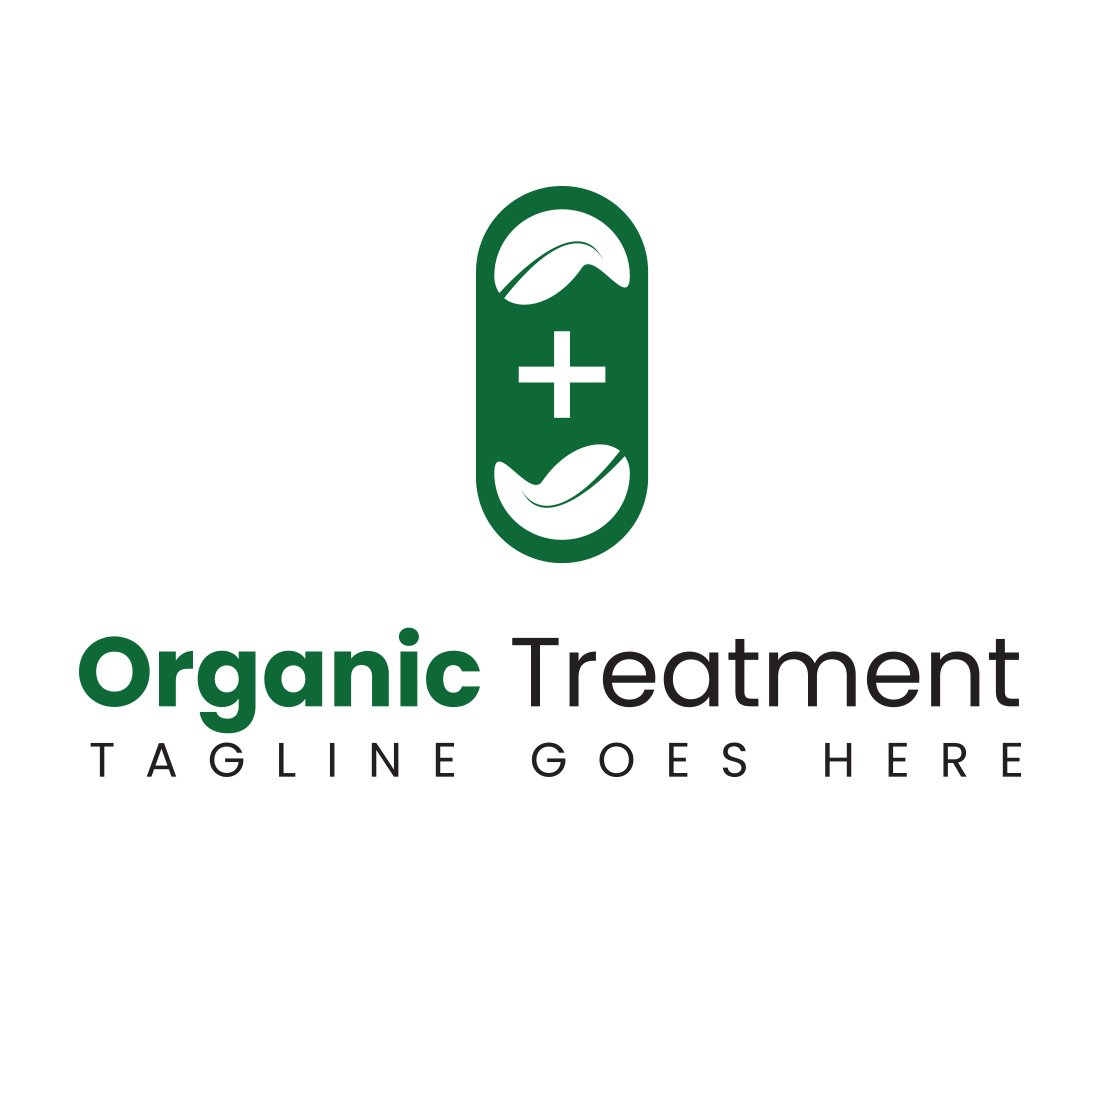 Organic Treatment Logo cover image.